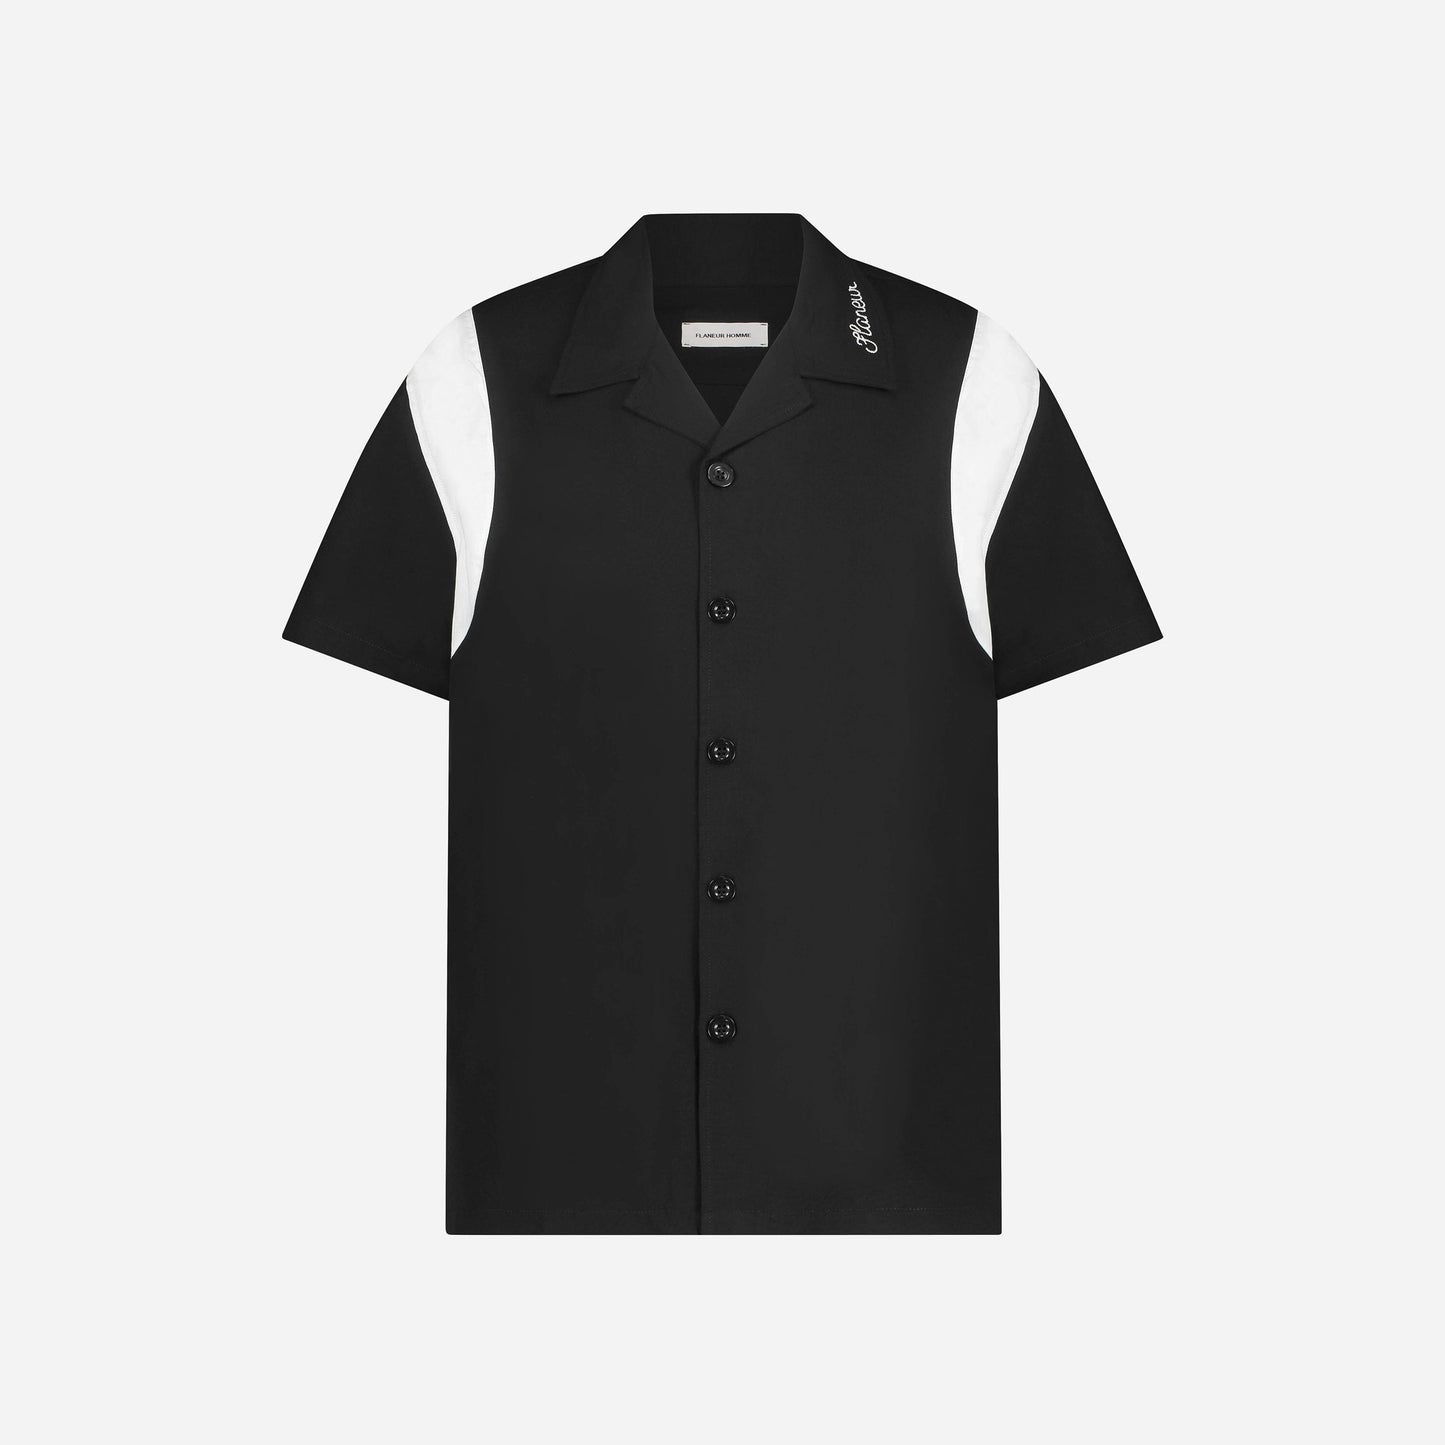 Chainstitch 'Flaneur' Bowling Shirt in Black